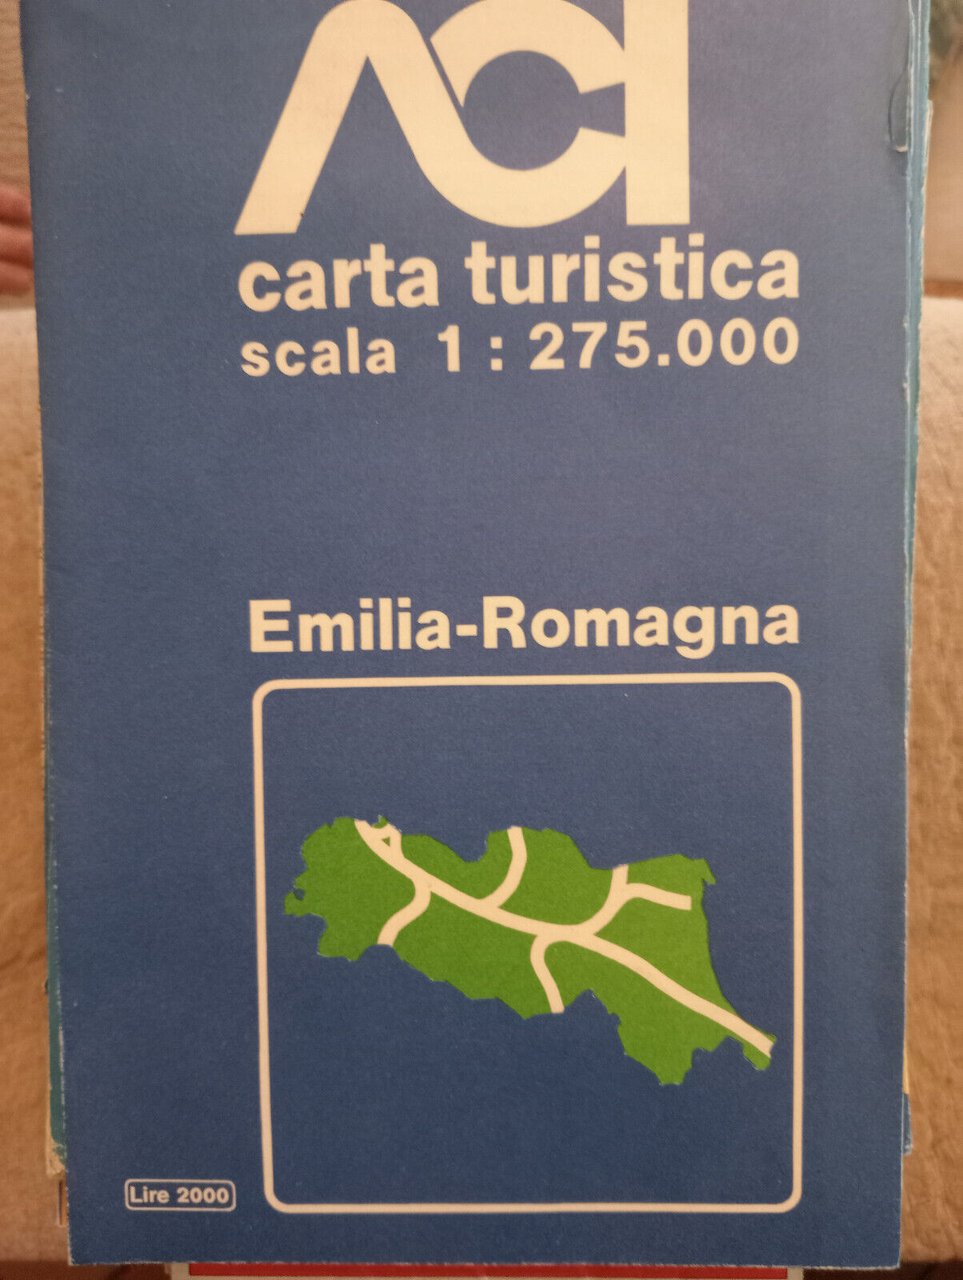 ACI Carta turistica Emilia-Romagna scala 1:275.000